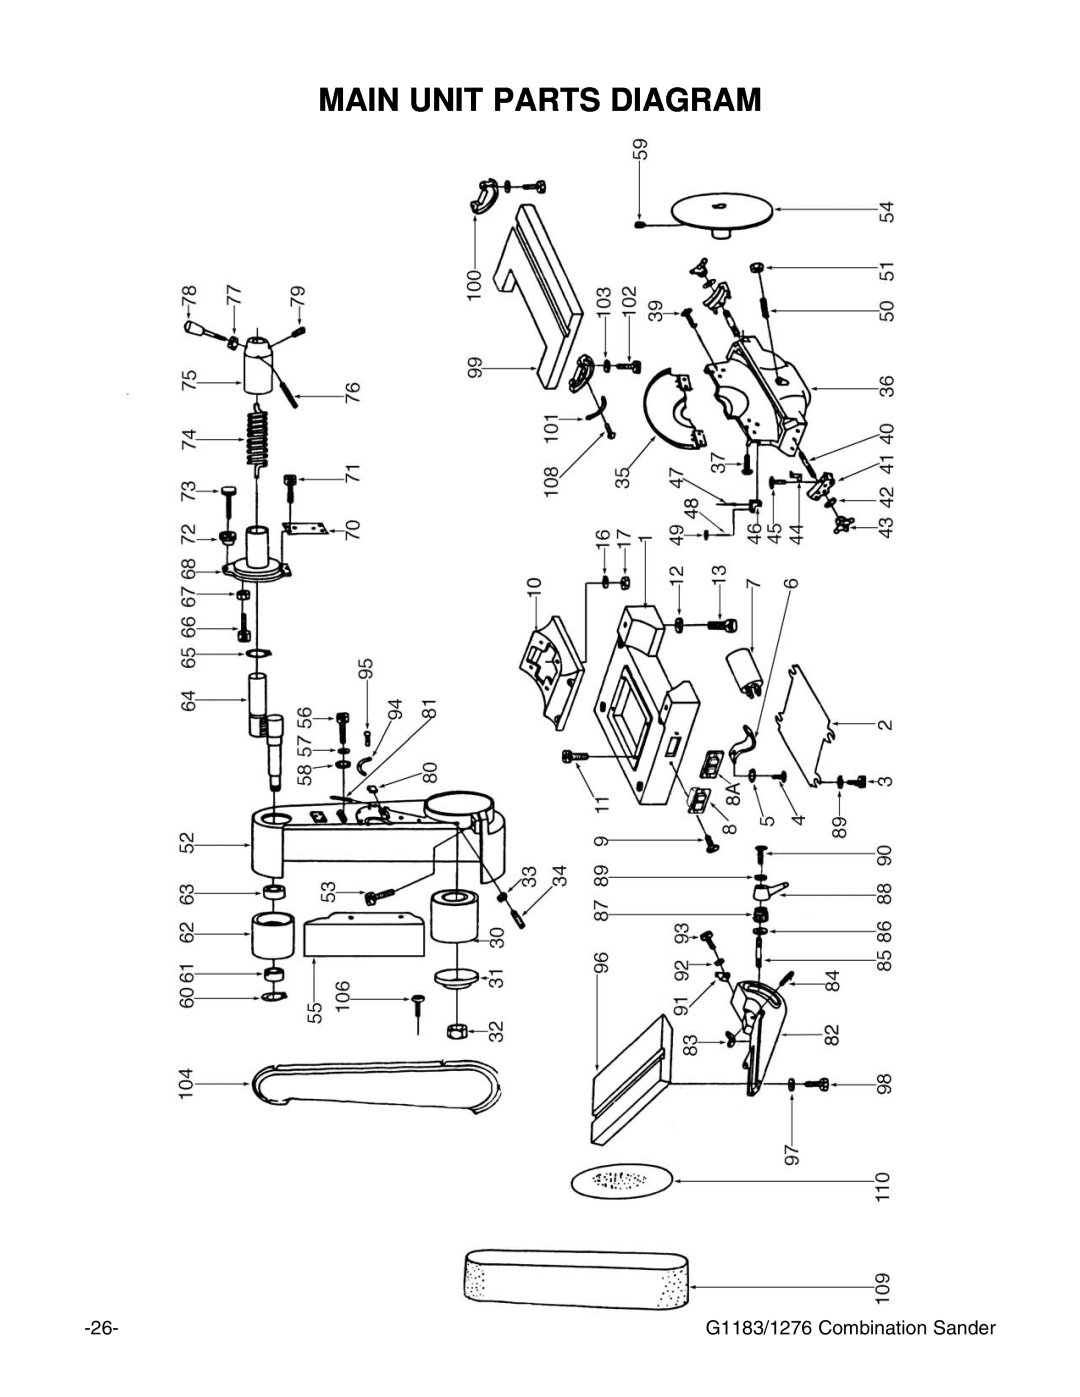 Grizzly G1276 instruction manual Main Unit Parts Diagram, G1183/1276 Combination Sander 